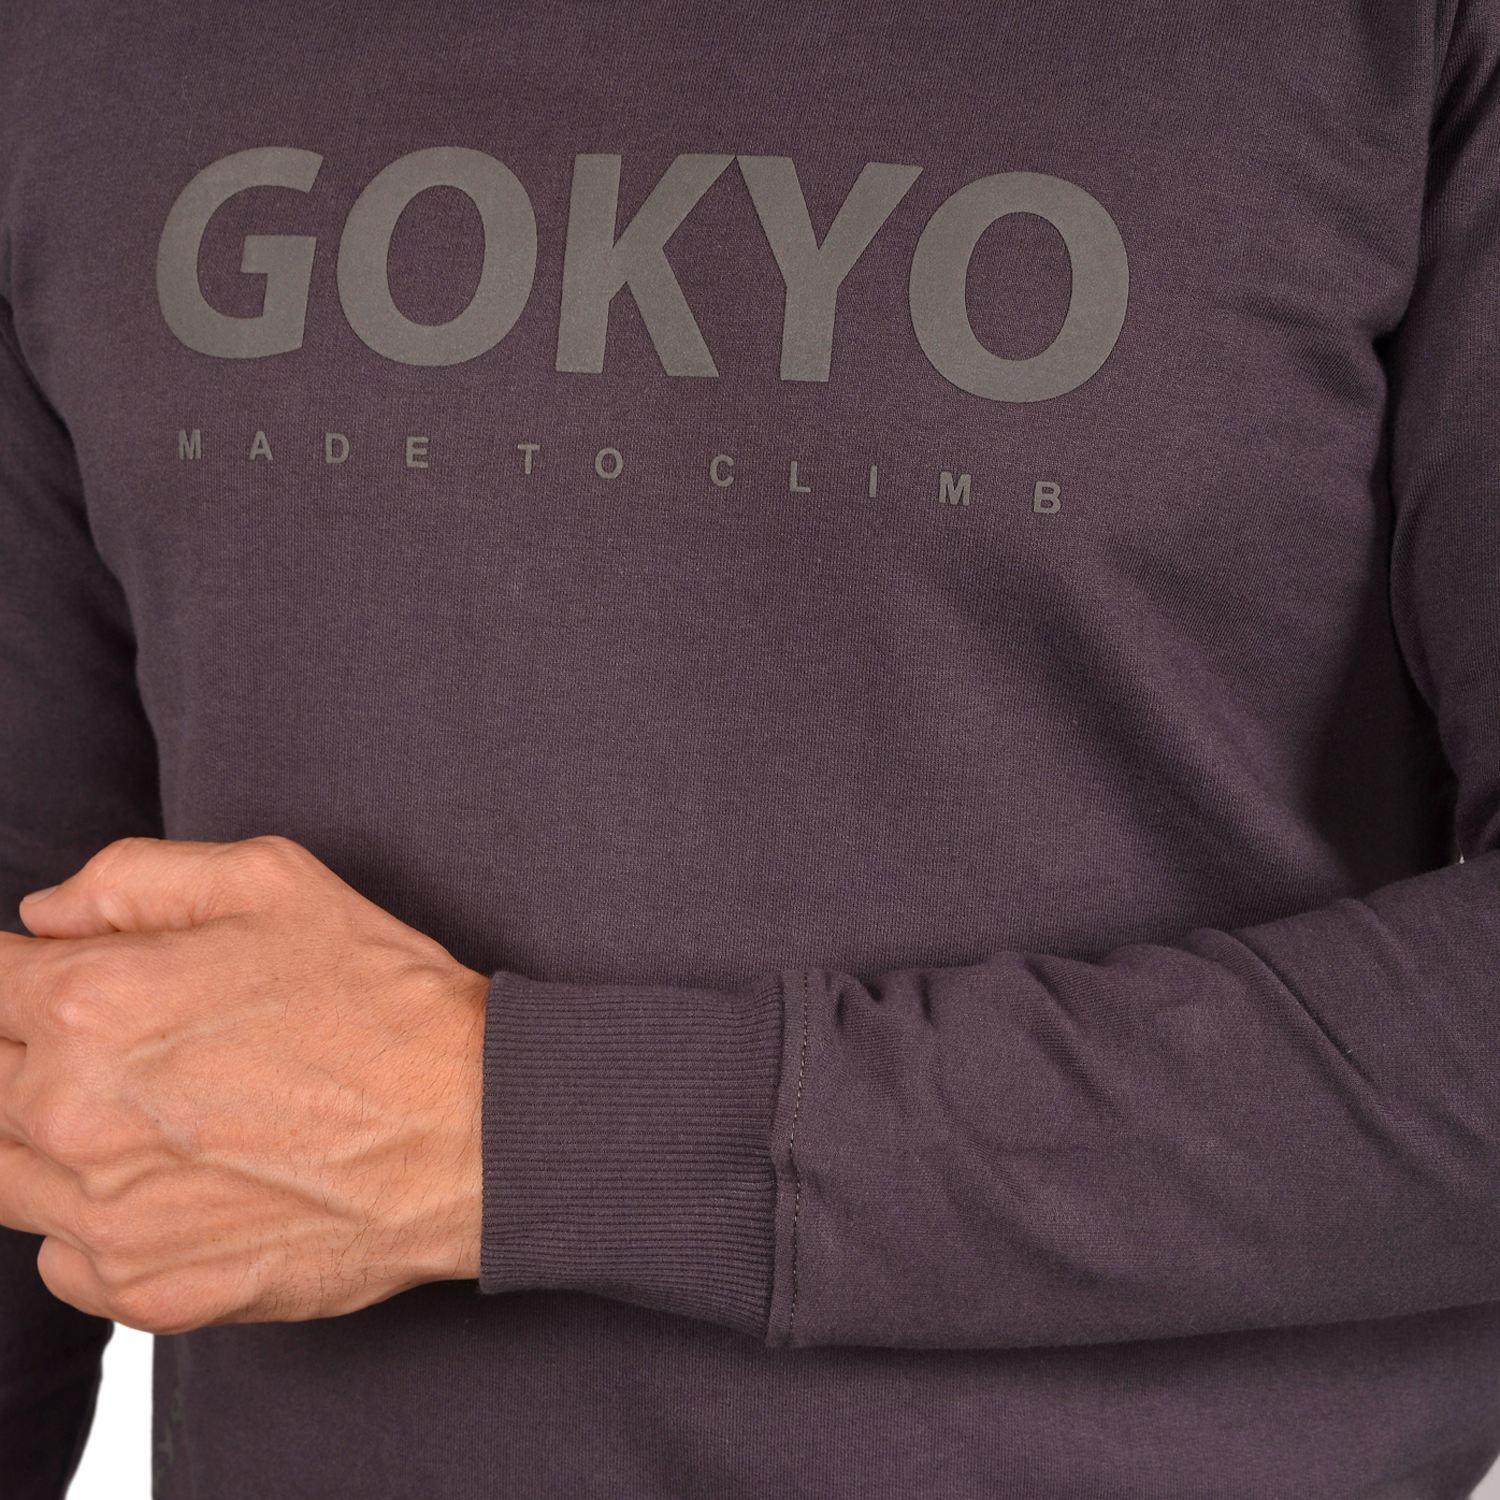 Buy Gokyo Kaza Sweatshirt | Trekking & Hiking T-shirts at Gokyo Outdoor Clothing & Gear